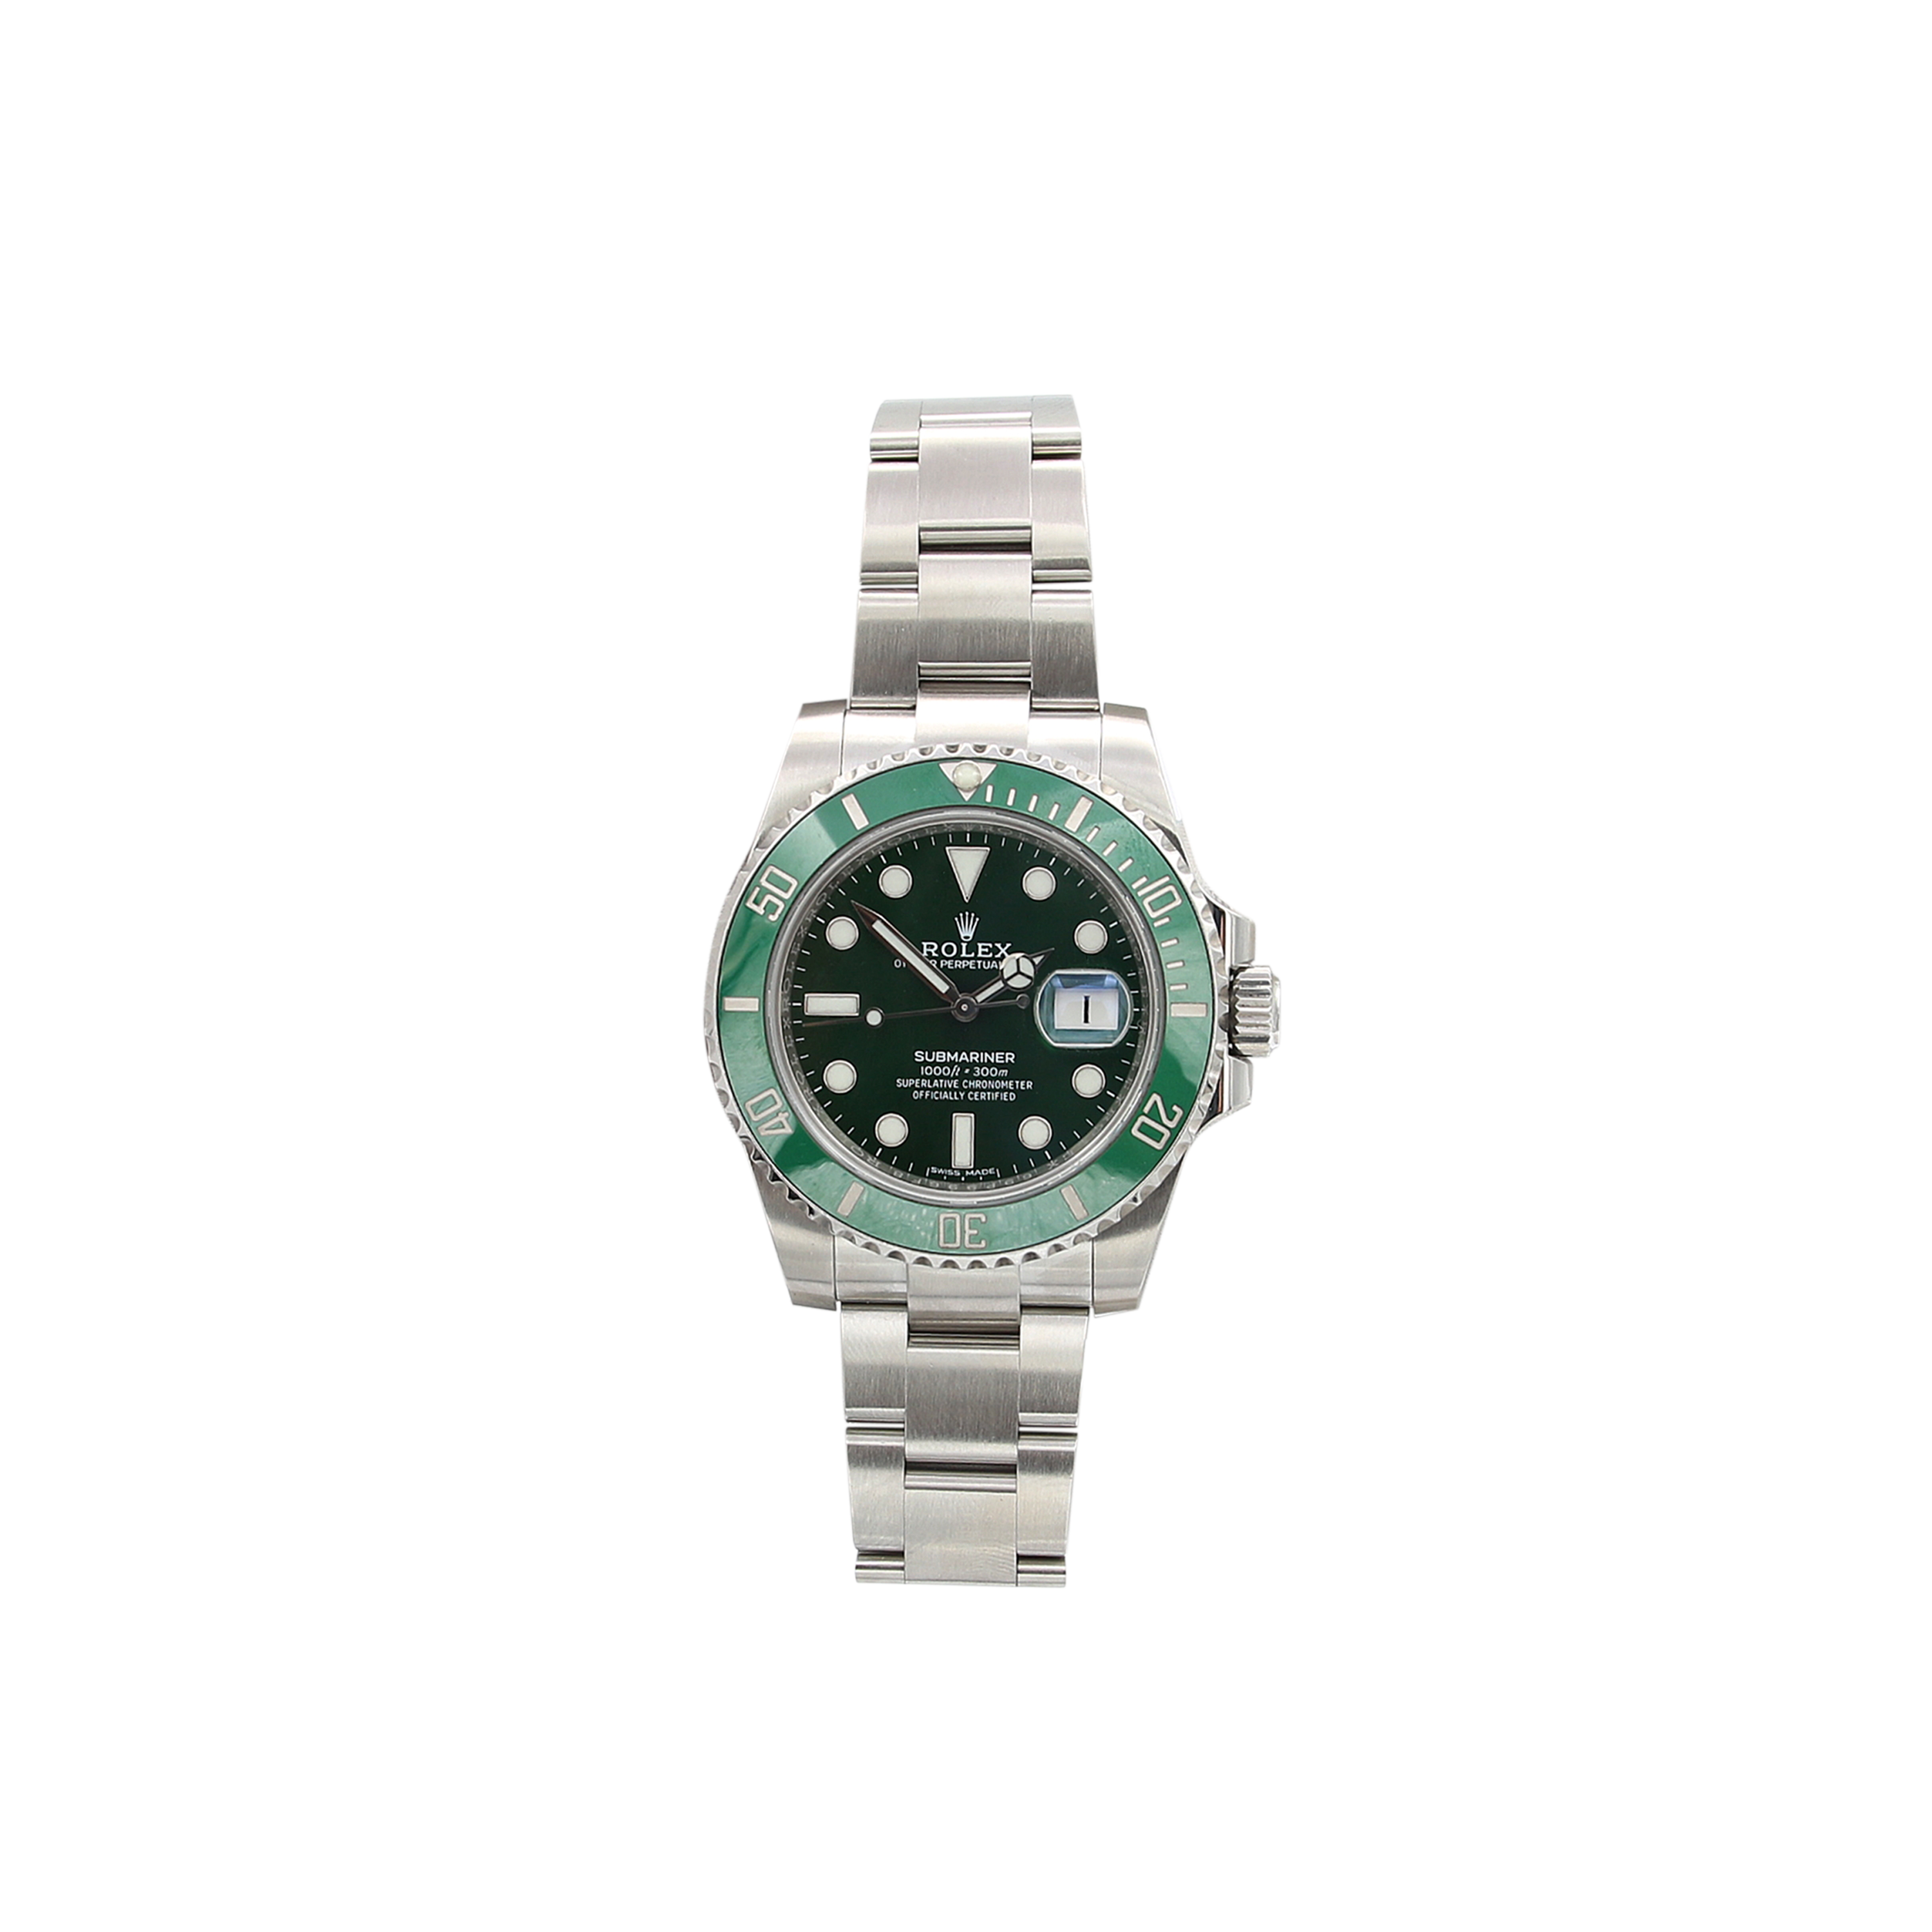 Rolex+Submariner+116610LV+Silver+Oyster+Bracelet+with+Green+Bezel